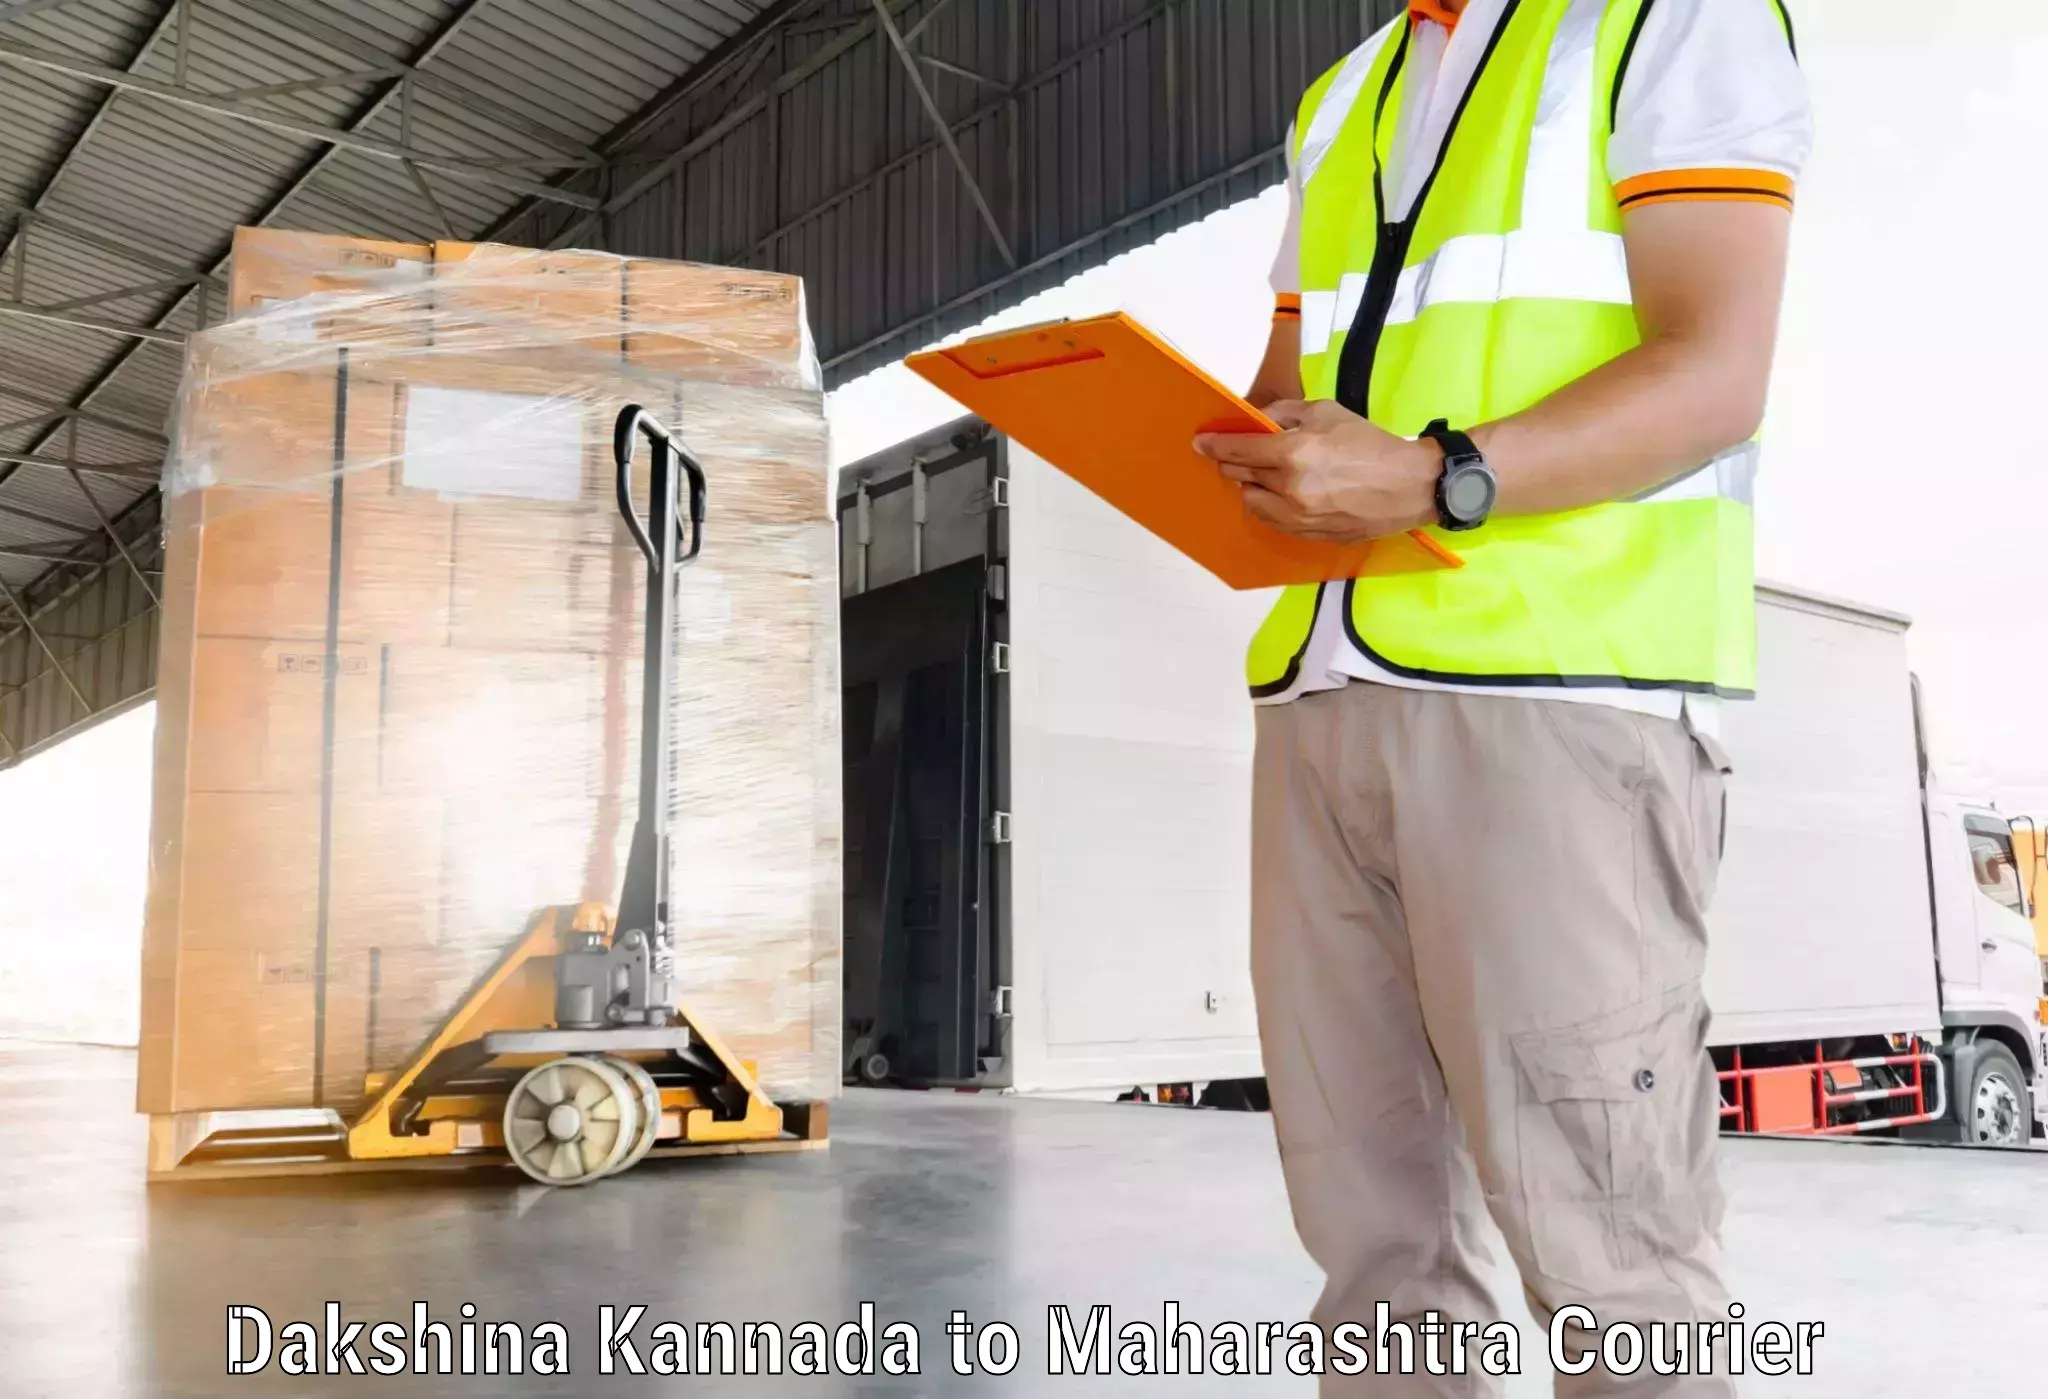 Courier service innovation Dakshina Kannada to DY Patil Vidyapeeth Pune